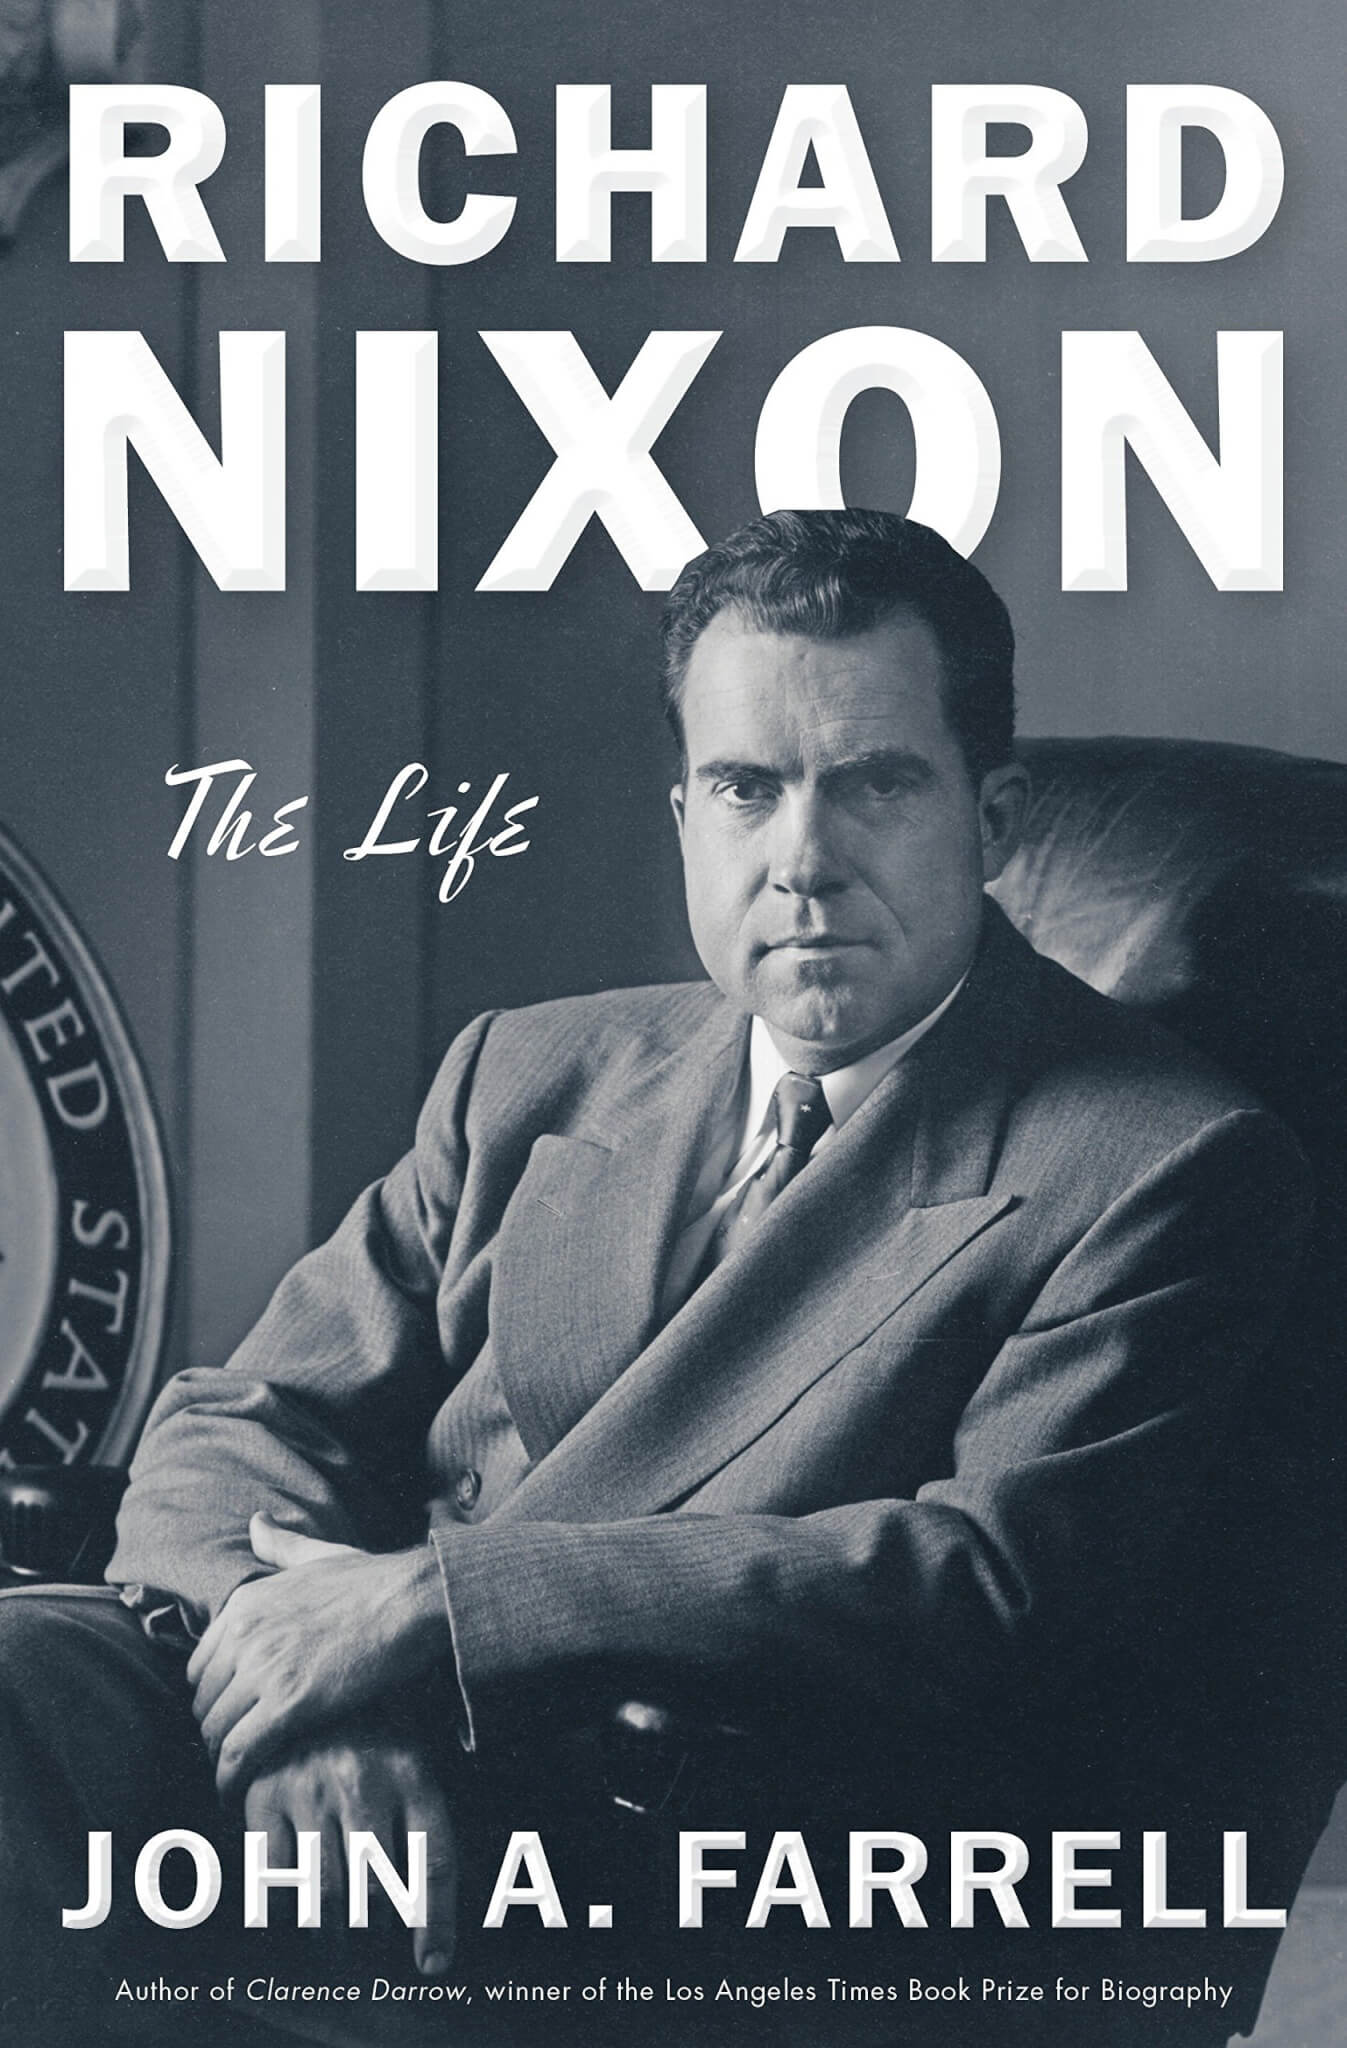 "Richard Nixon: The Life" by John A. Farrell